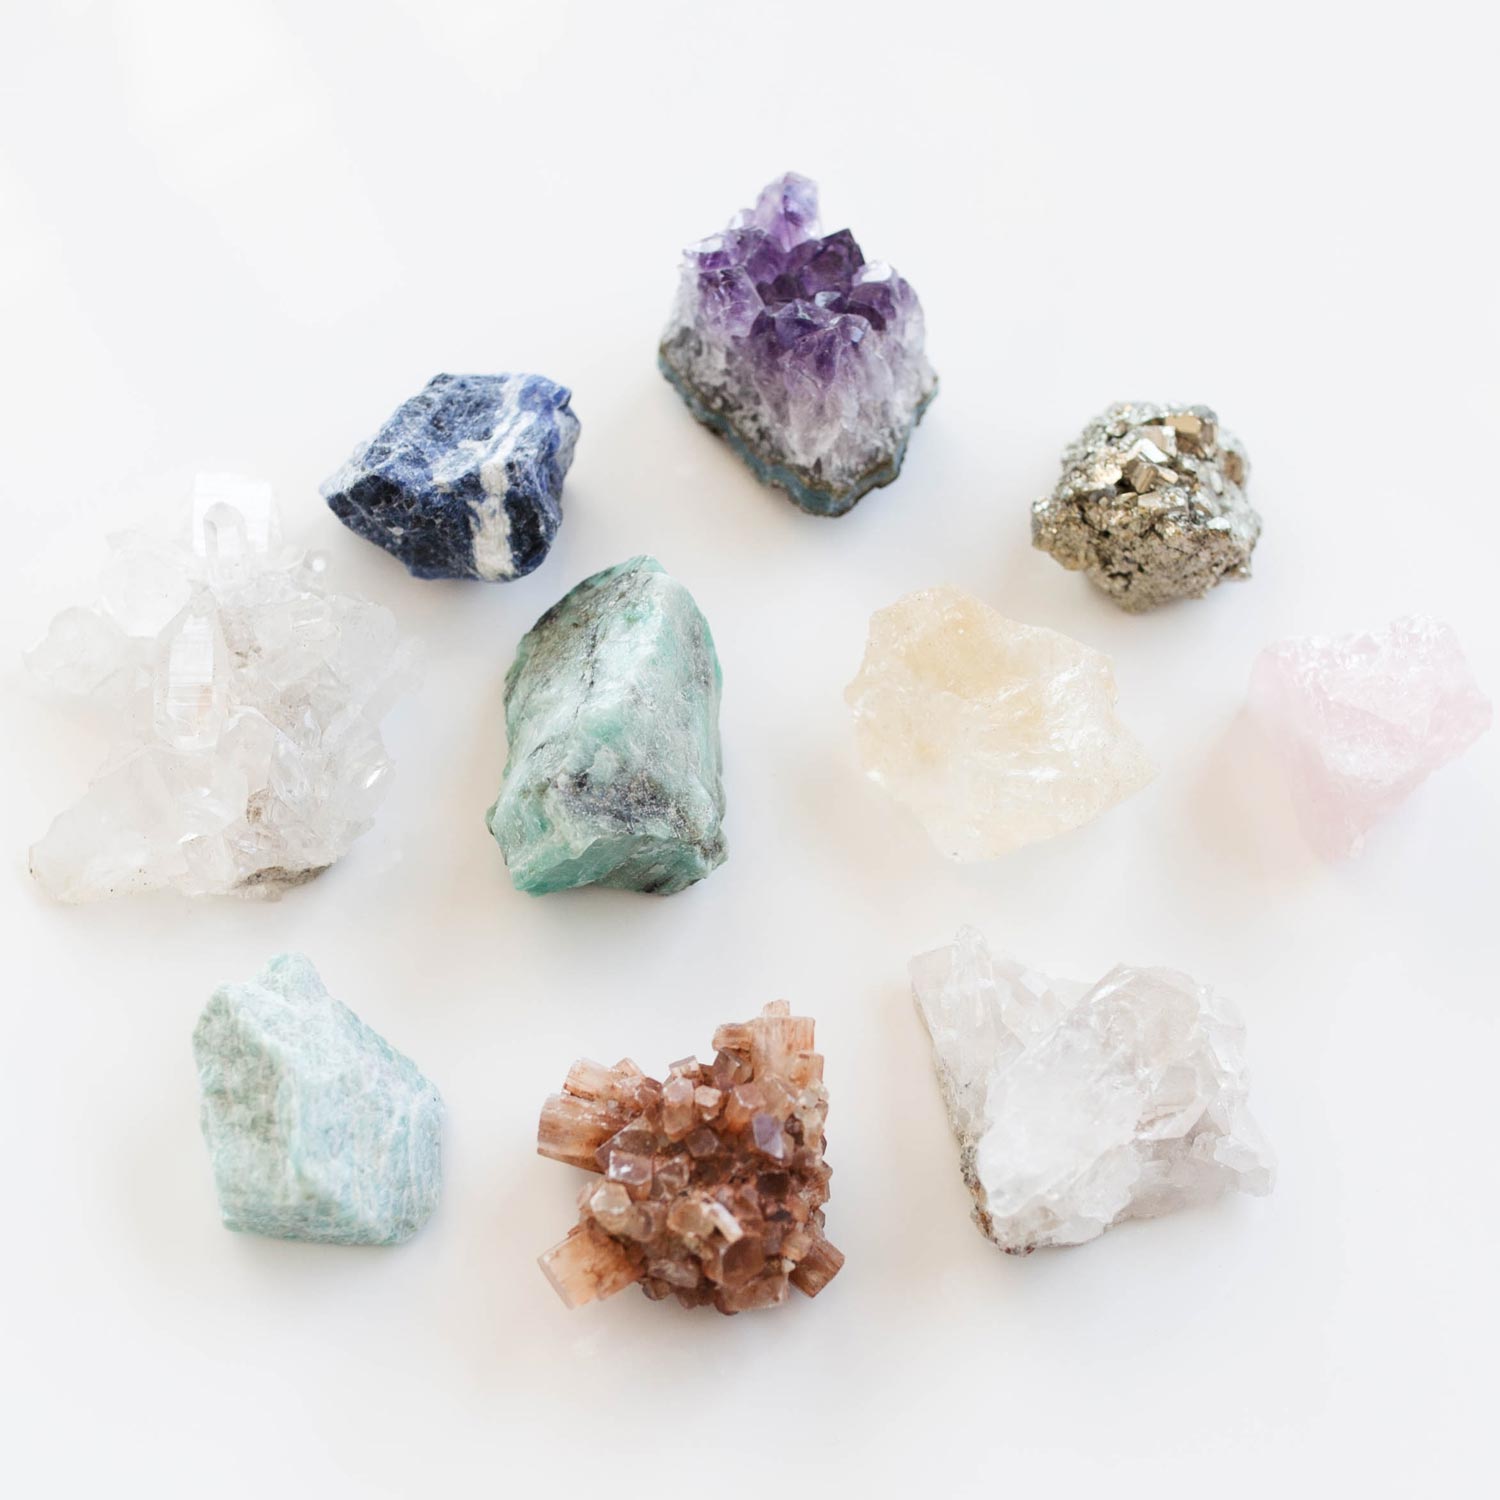 DIY Crystal Terrarium by Dani Barbe. Use these beautiful raw crystals to create an easy DIY terrarium!